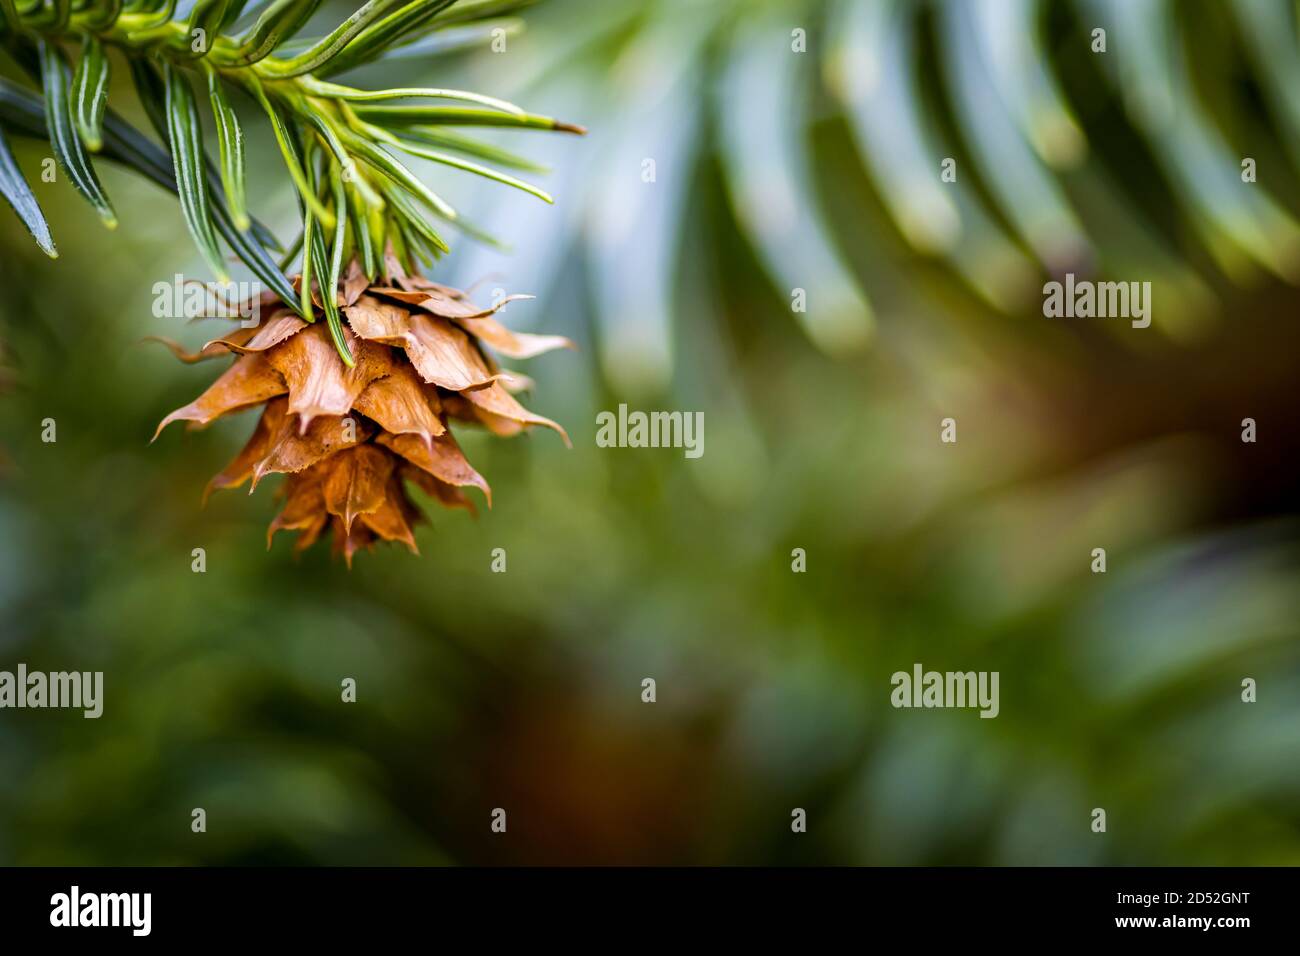 China fir tree (Cunninghamia lanceolata) pine cone in a Woodland Garden, Hungary Stock Photo